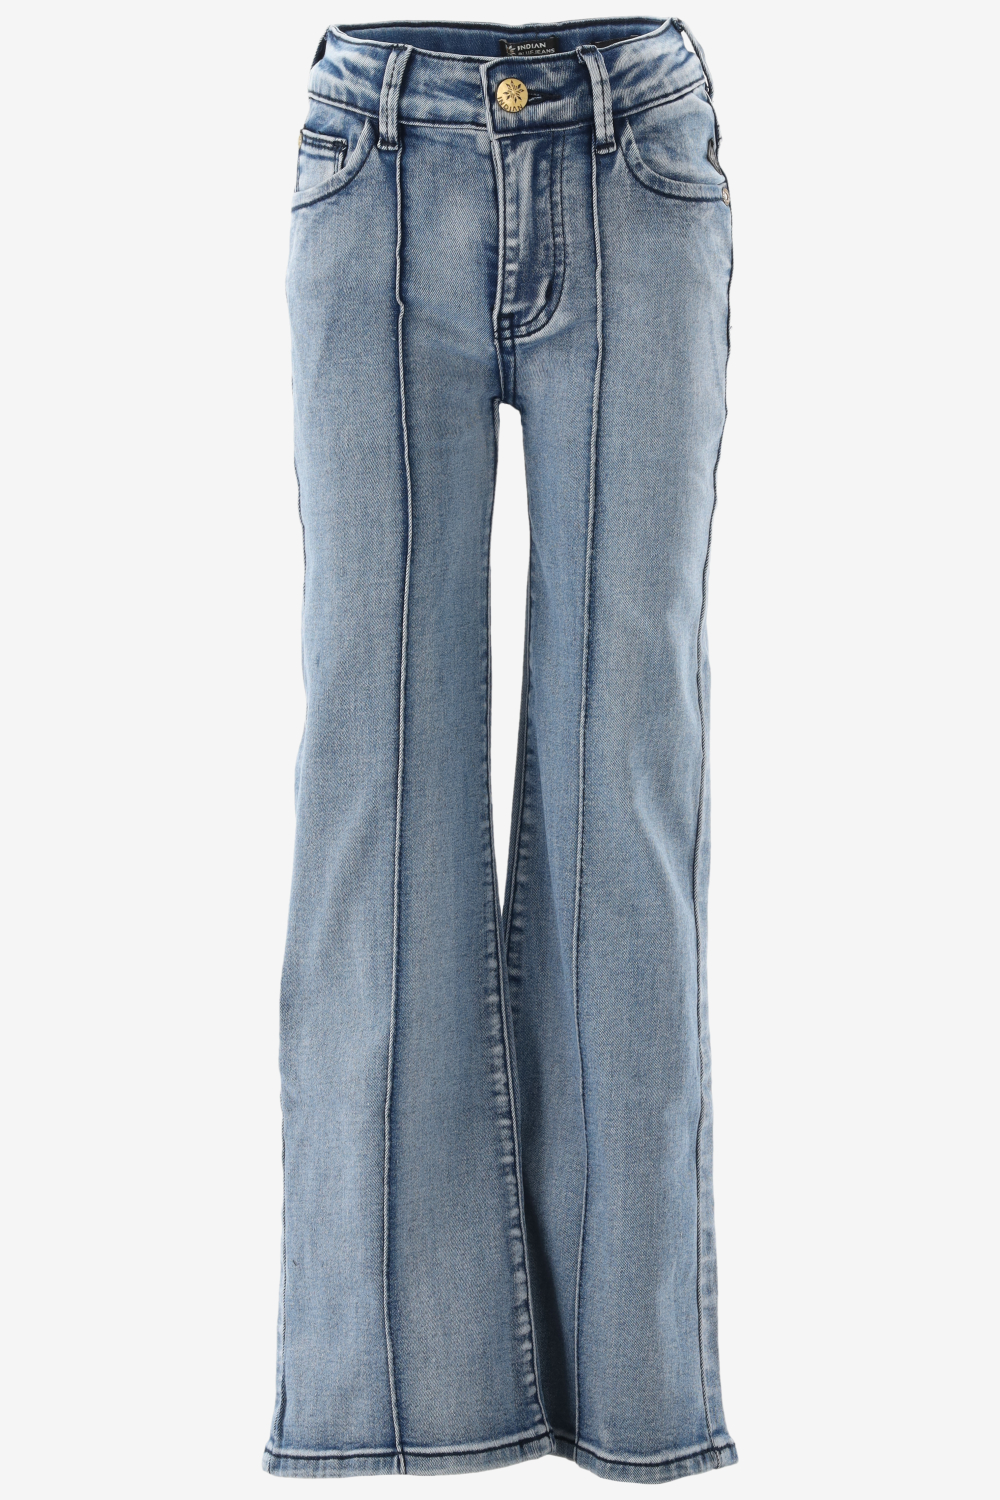 Indian Blue Jeans Lange broek meisje dark denim maat 152